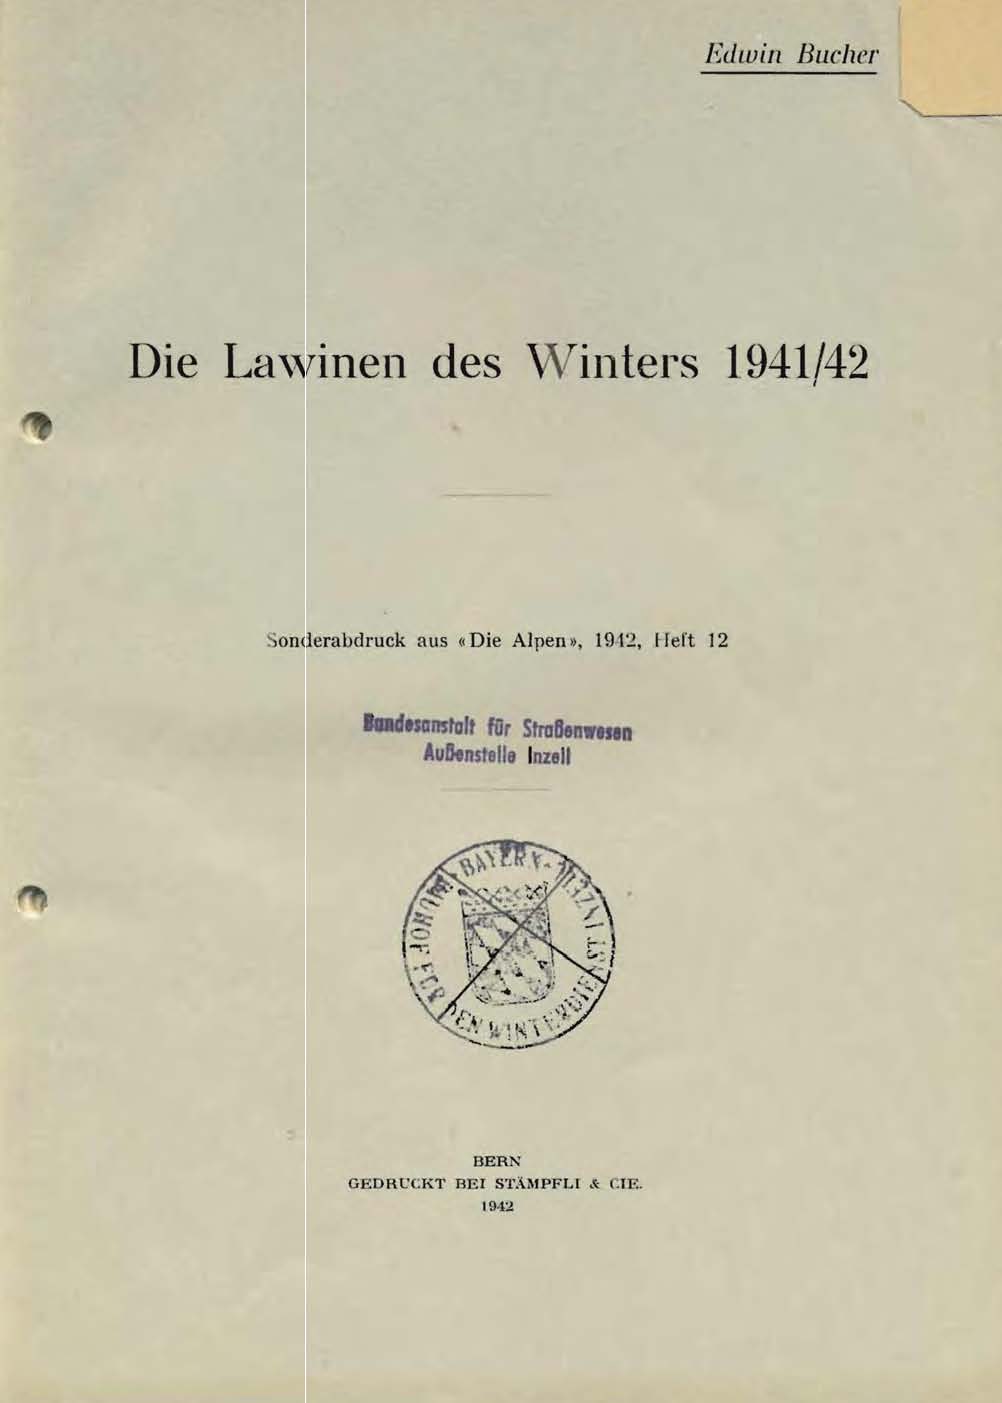 Die Lawinen des Winters 1941/42